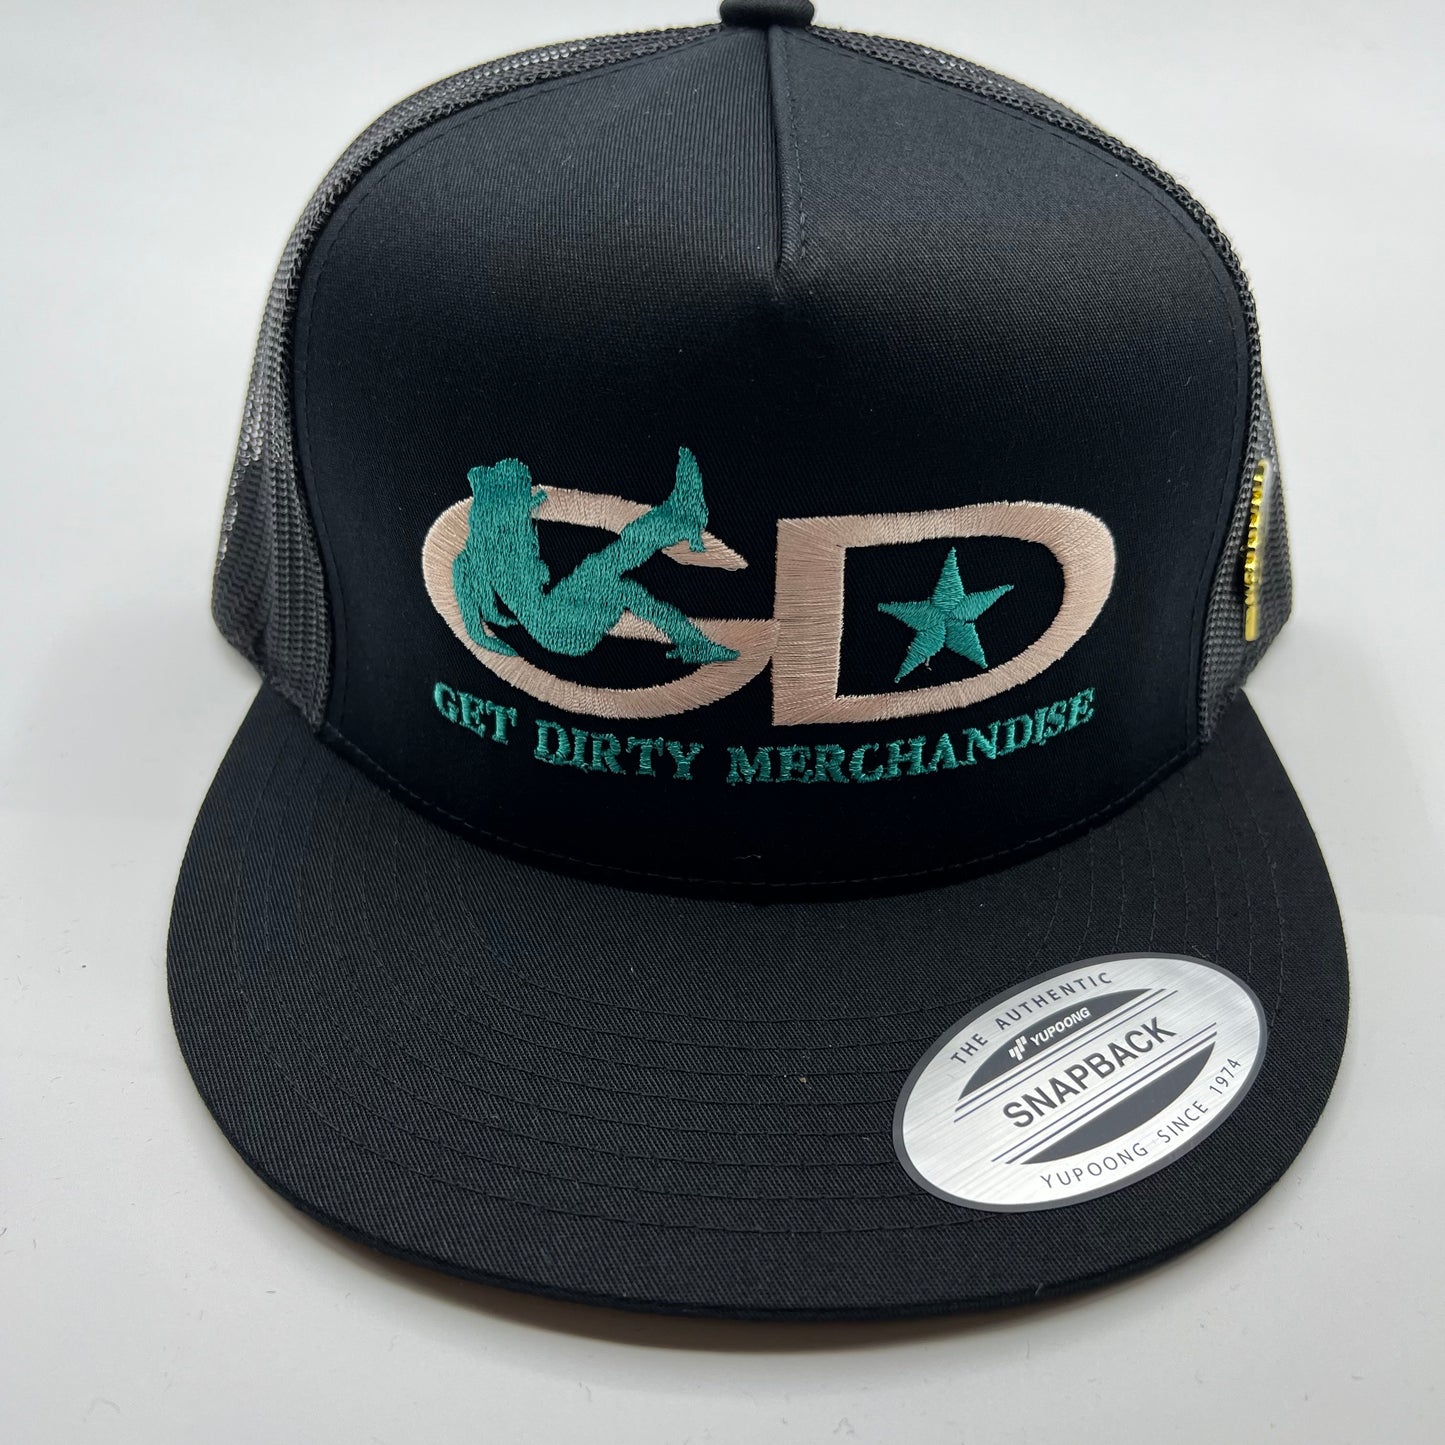 Get Dirty Merchandise Beta RG/TL Black Trucker Hat